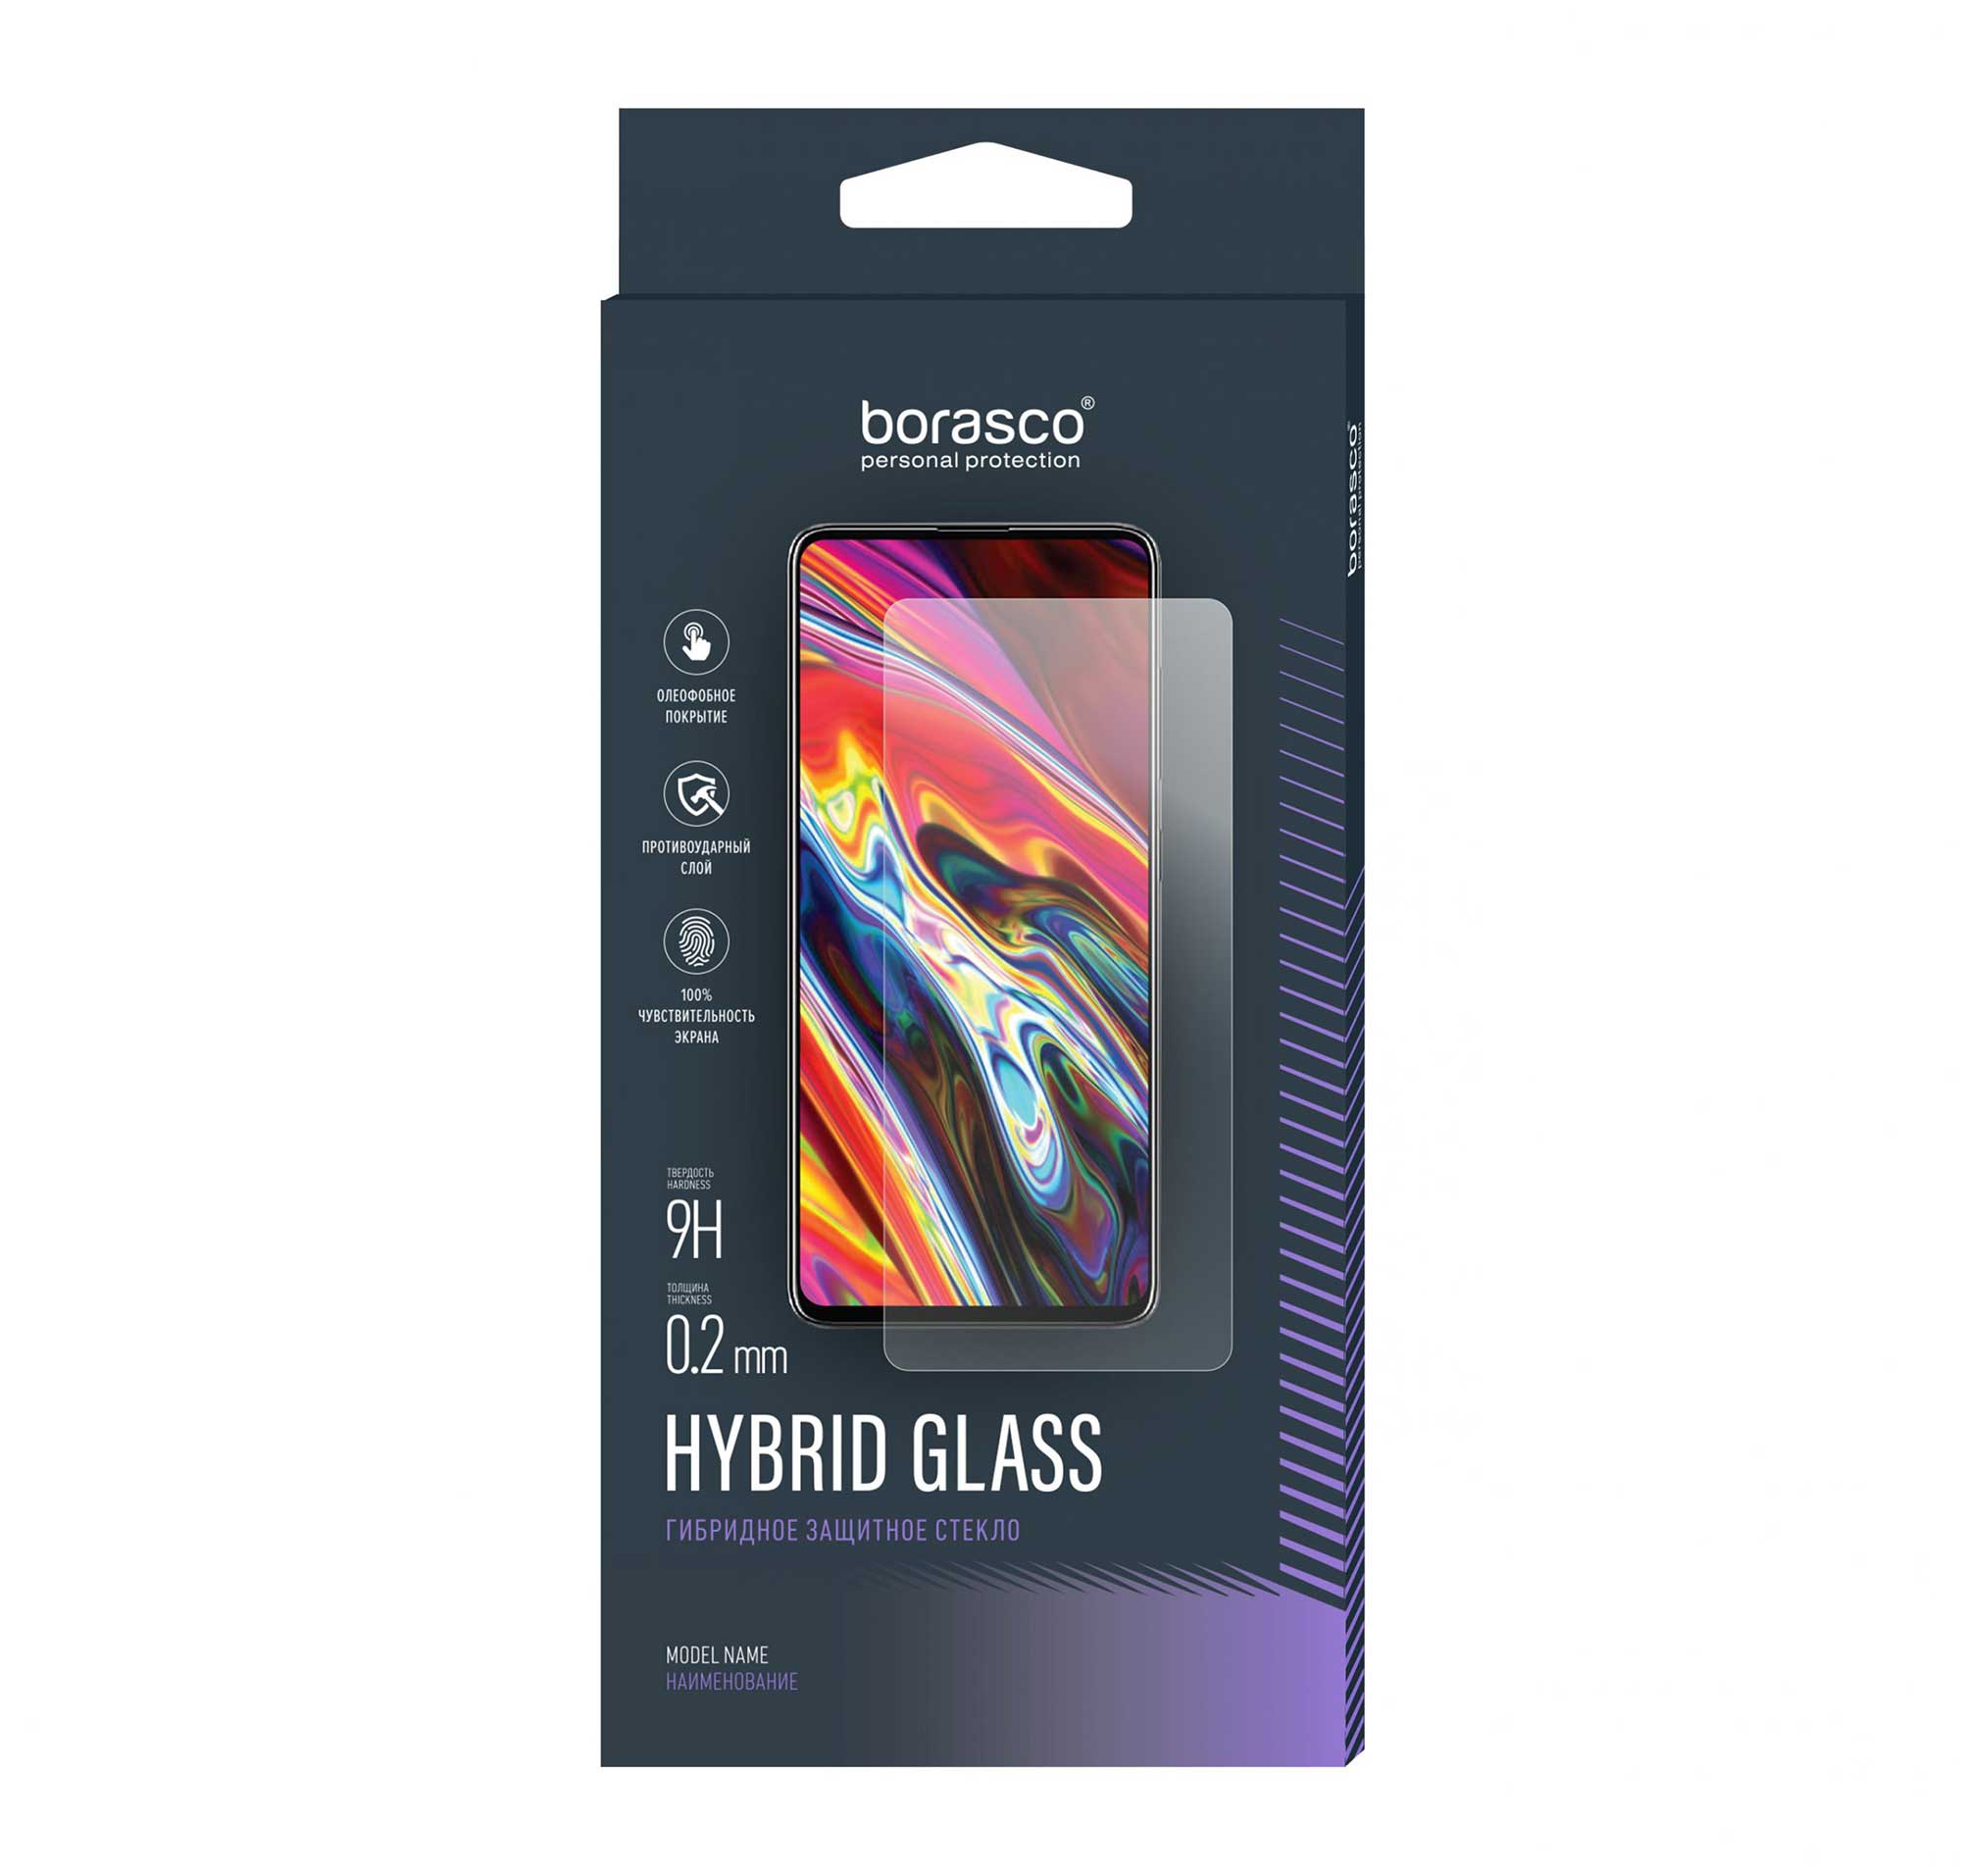 Защитное стекло Hybrid Glass для ZTE Blade A3 2020 защитное стекло для камеры hybrid glass для zte blade a7 2020